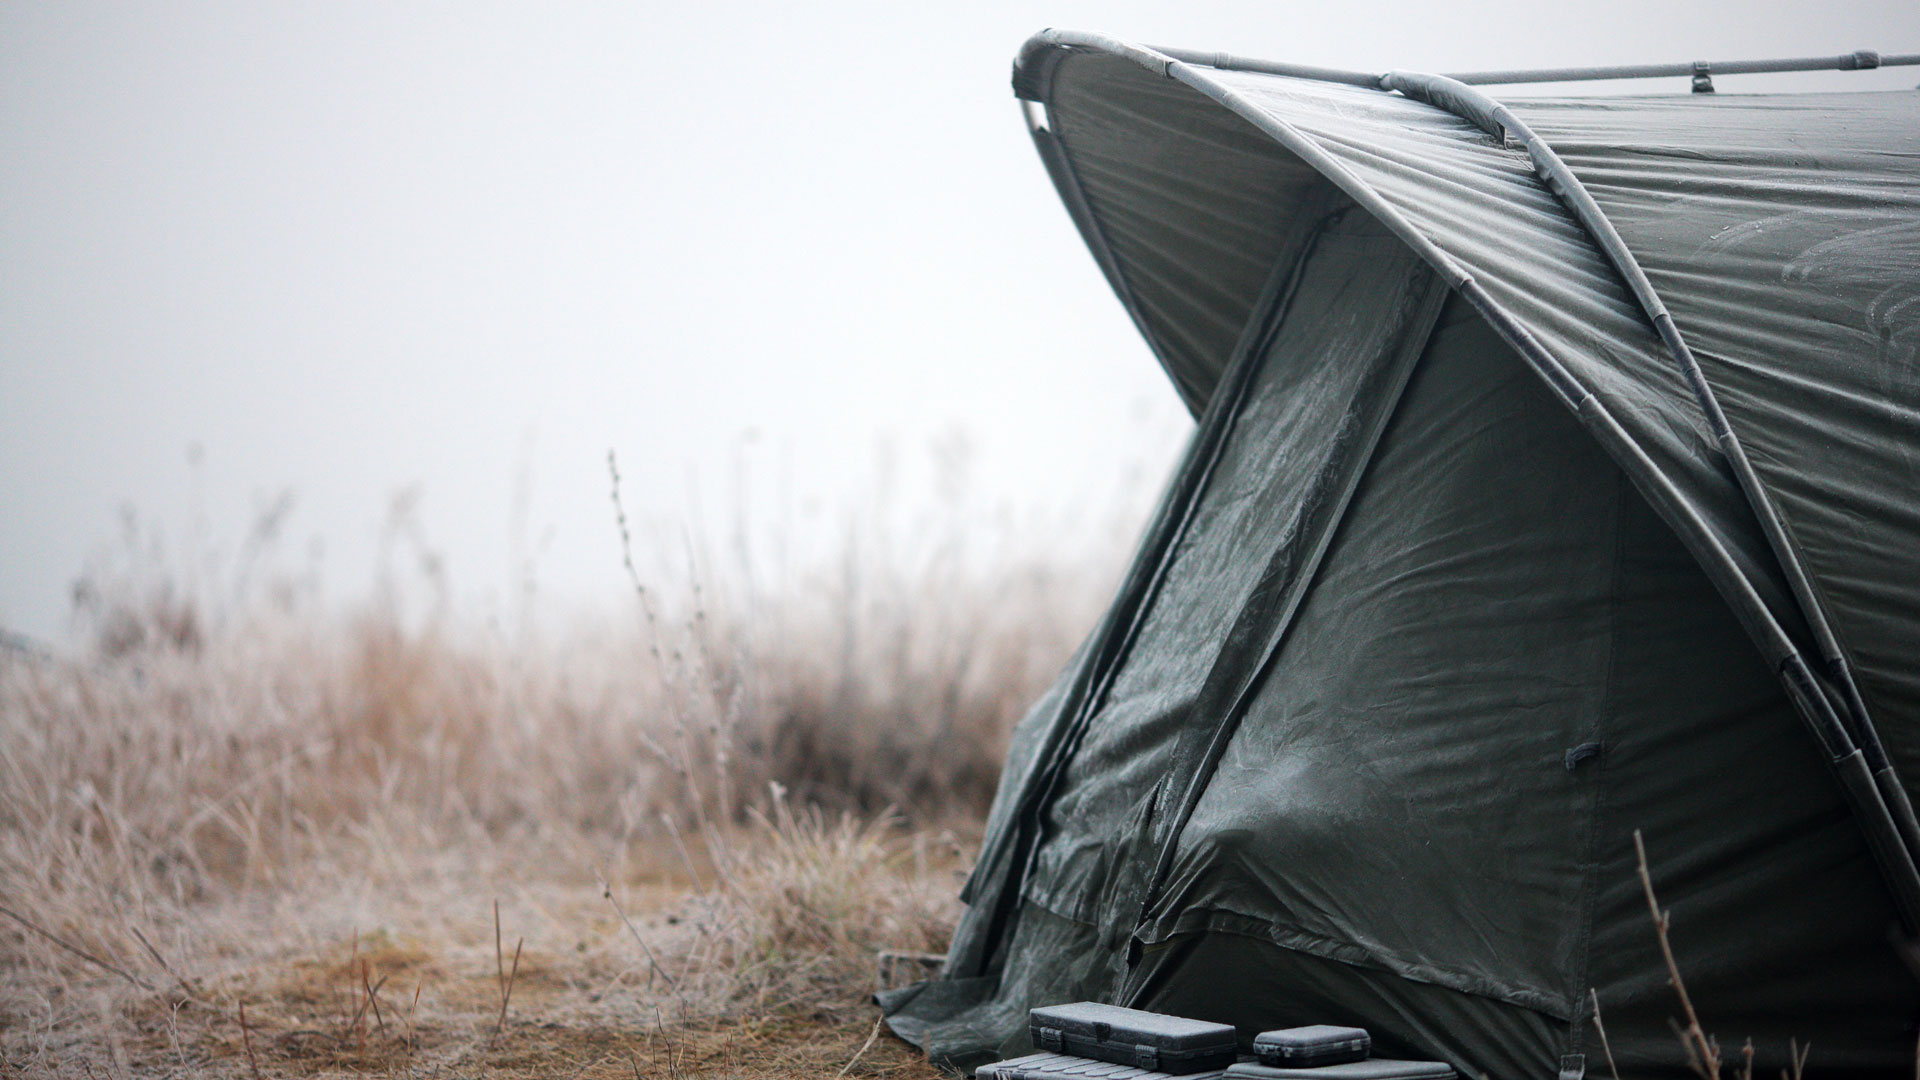 https://www.campingandcaravanningclub.co.uk/-/media/Images/Blog/Equipment/4-Season-Tents/Green-Winter-Tent.jpg?rev=4241864cf3c845c38470f480dd56e5f6